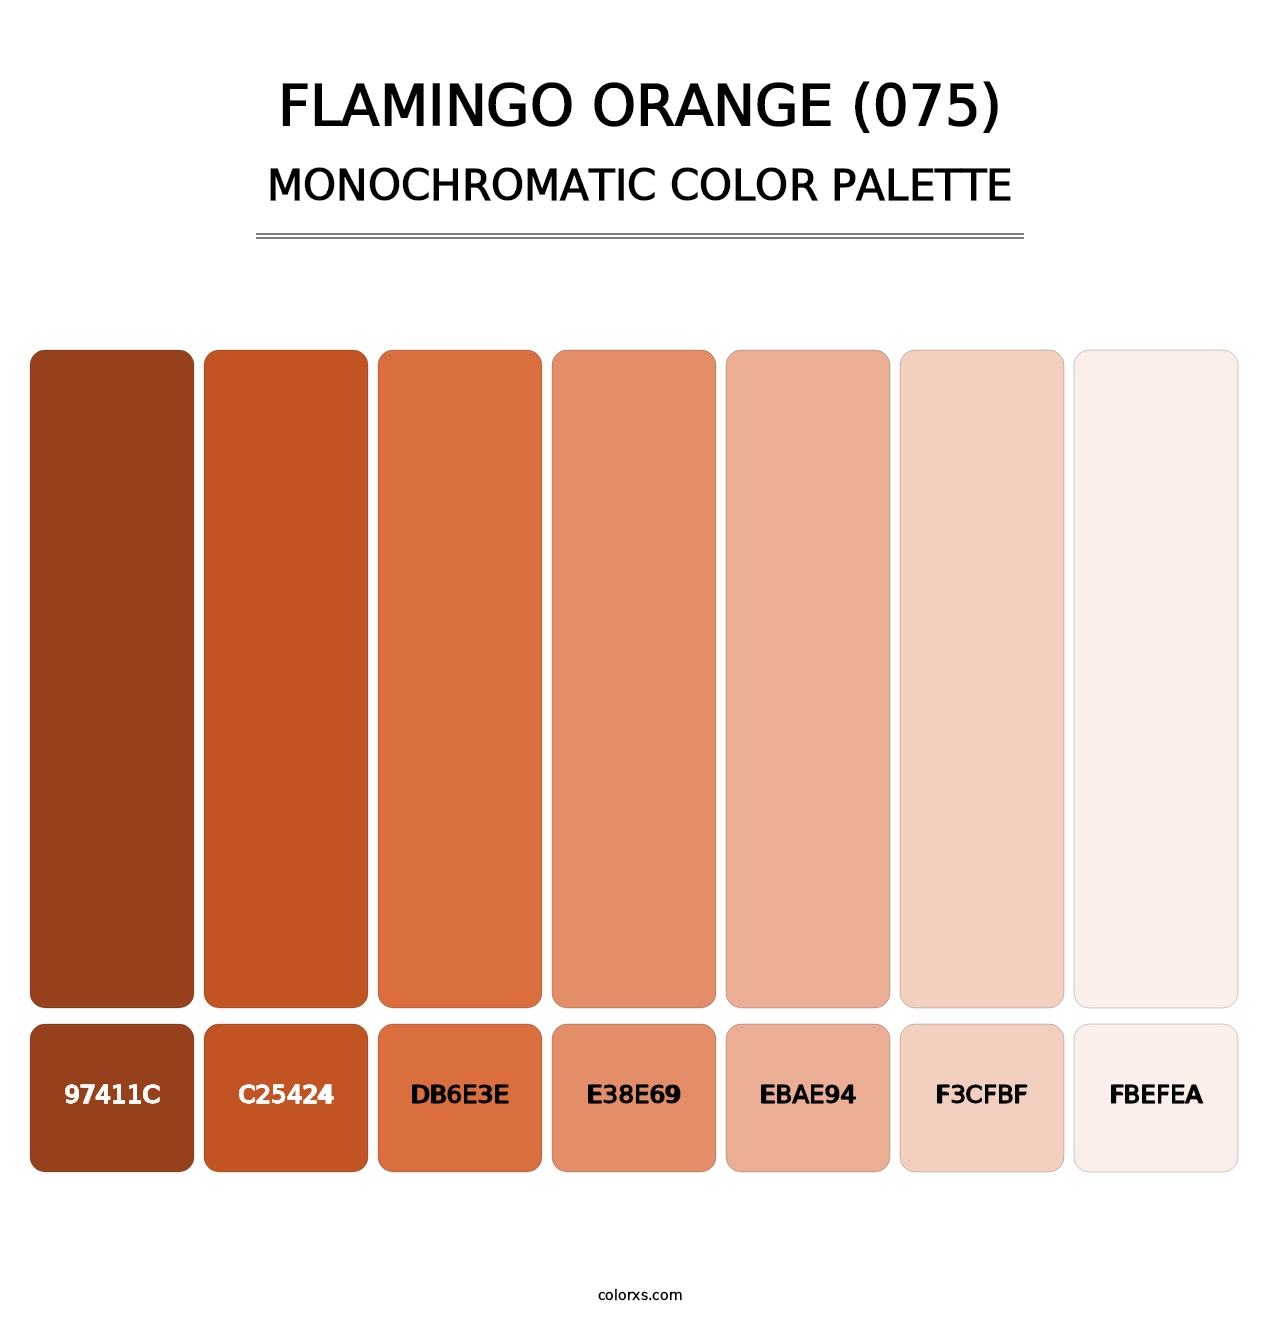 Flamingo Orange (075) - Monochromatic Color Palette